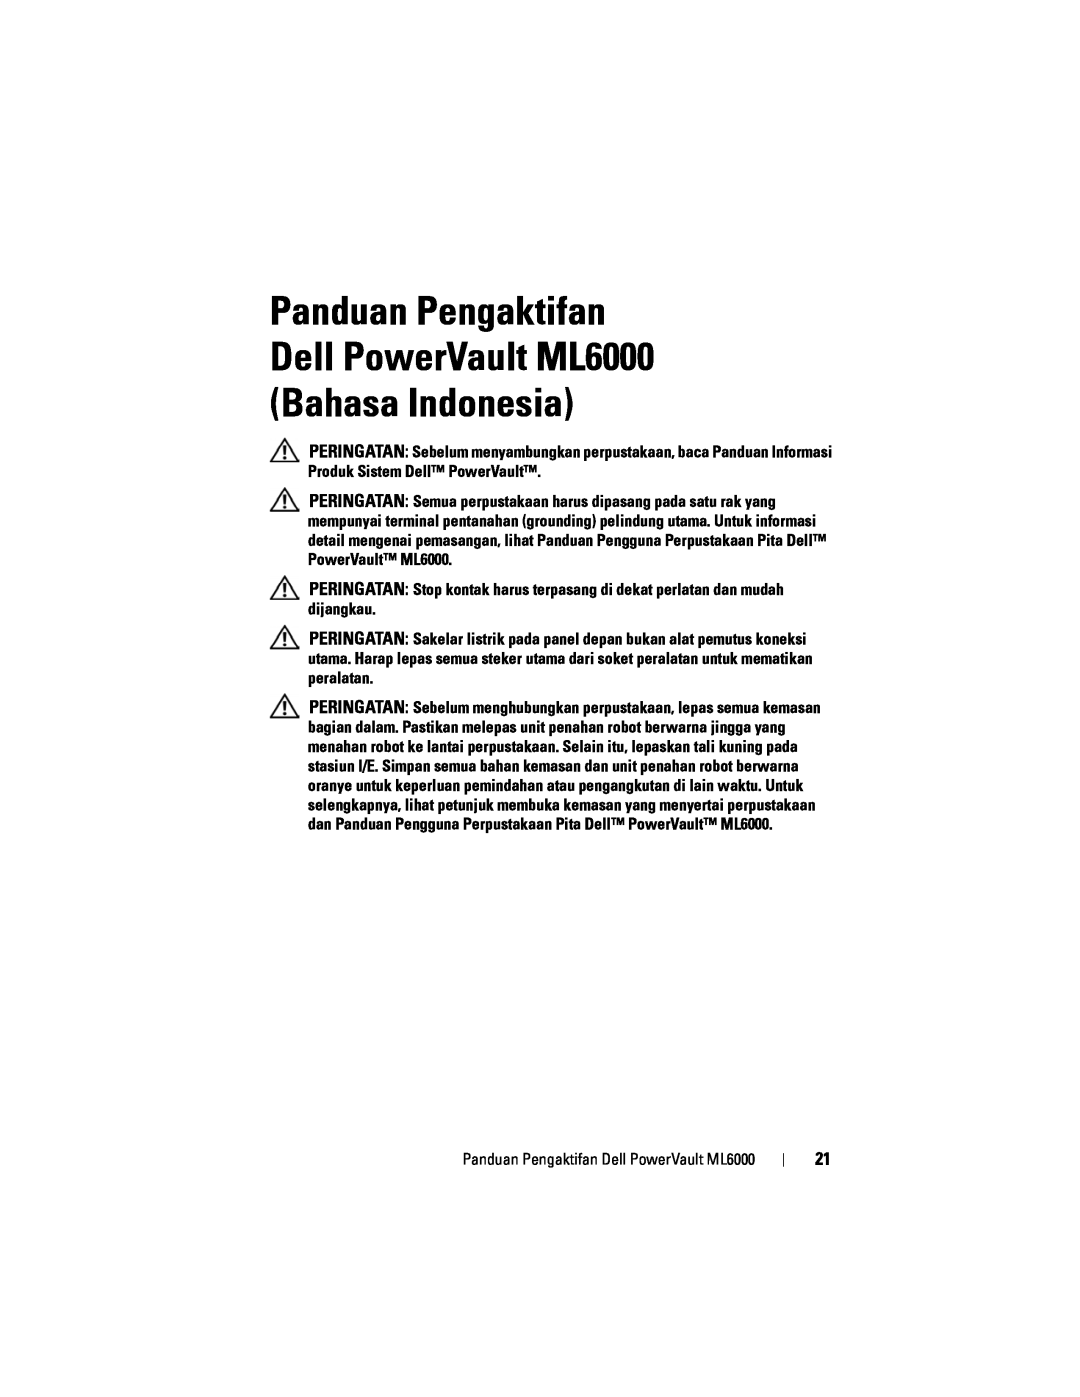 Dell manual Panduan Pengaktifan Dell PowerVault ML6000 Bahasa Indonesia 